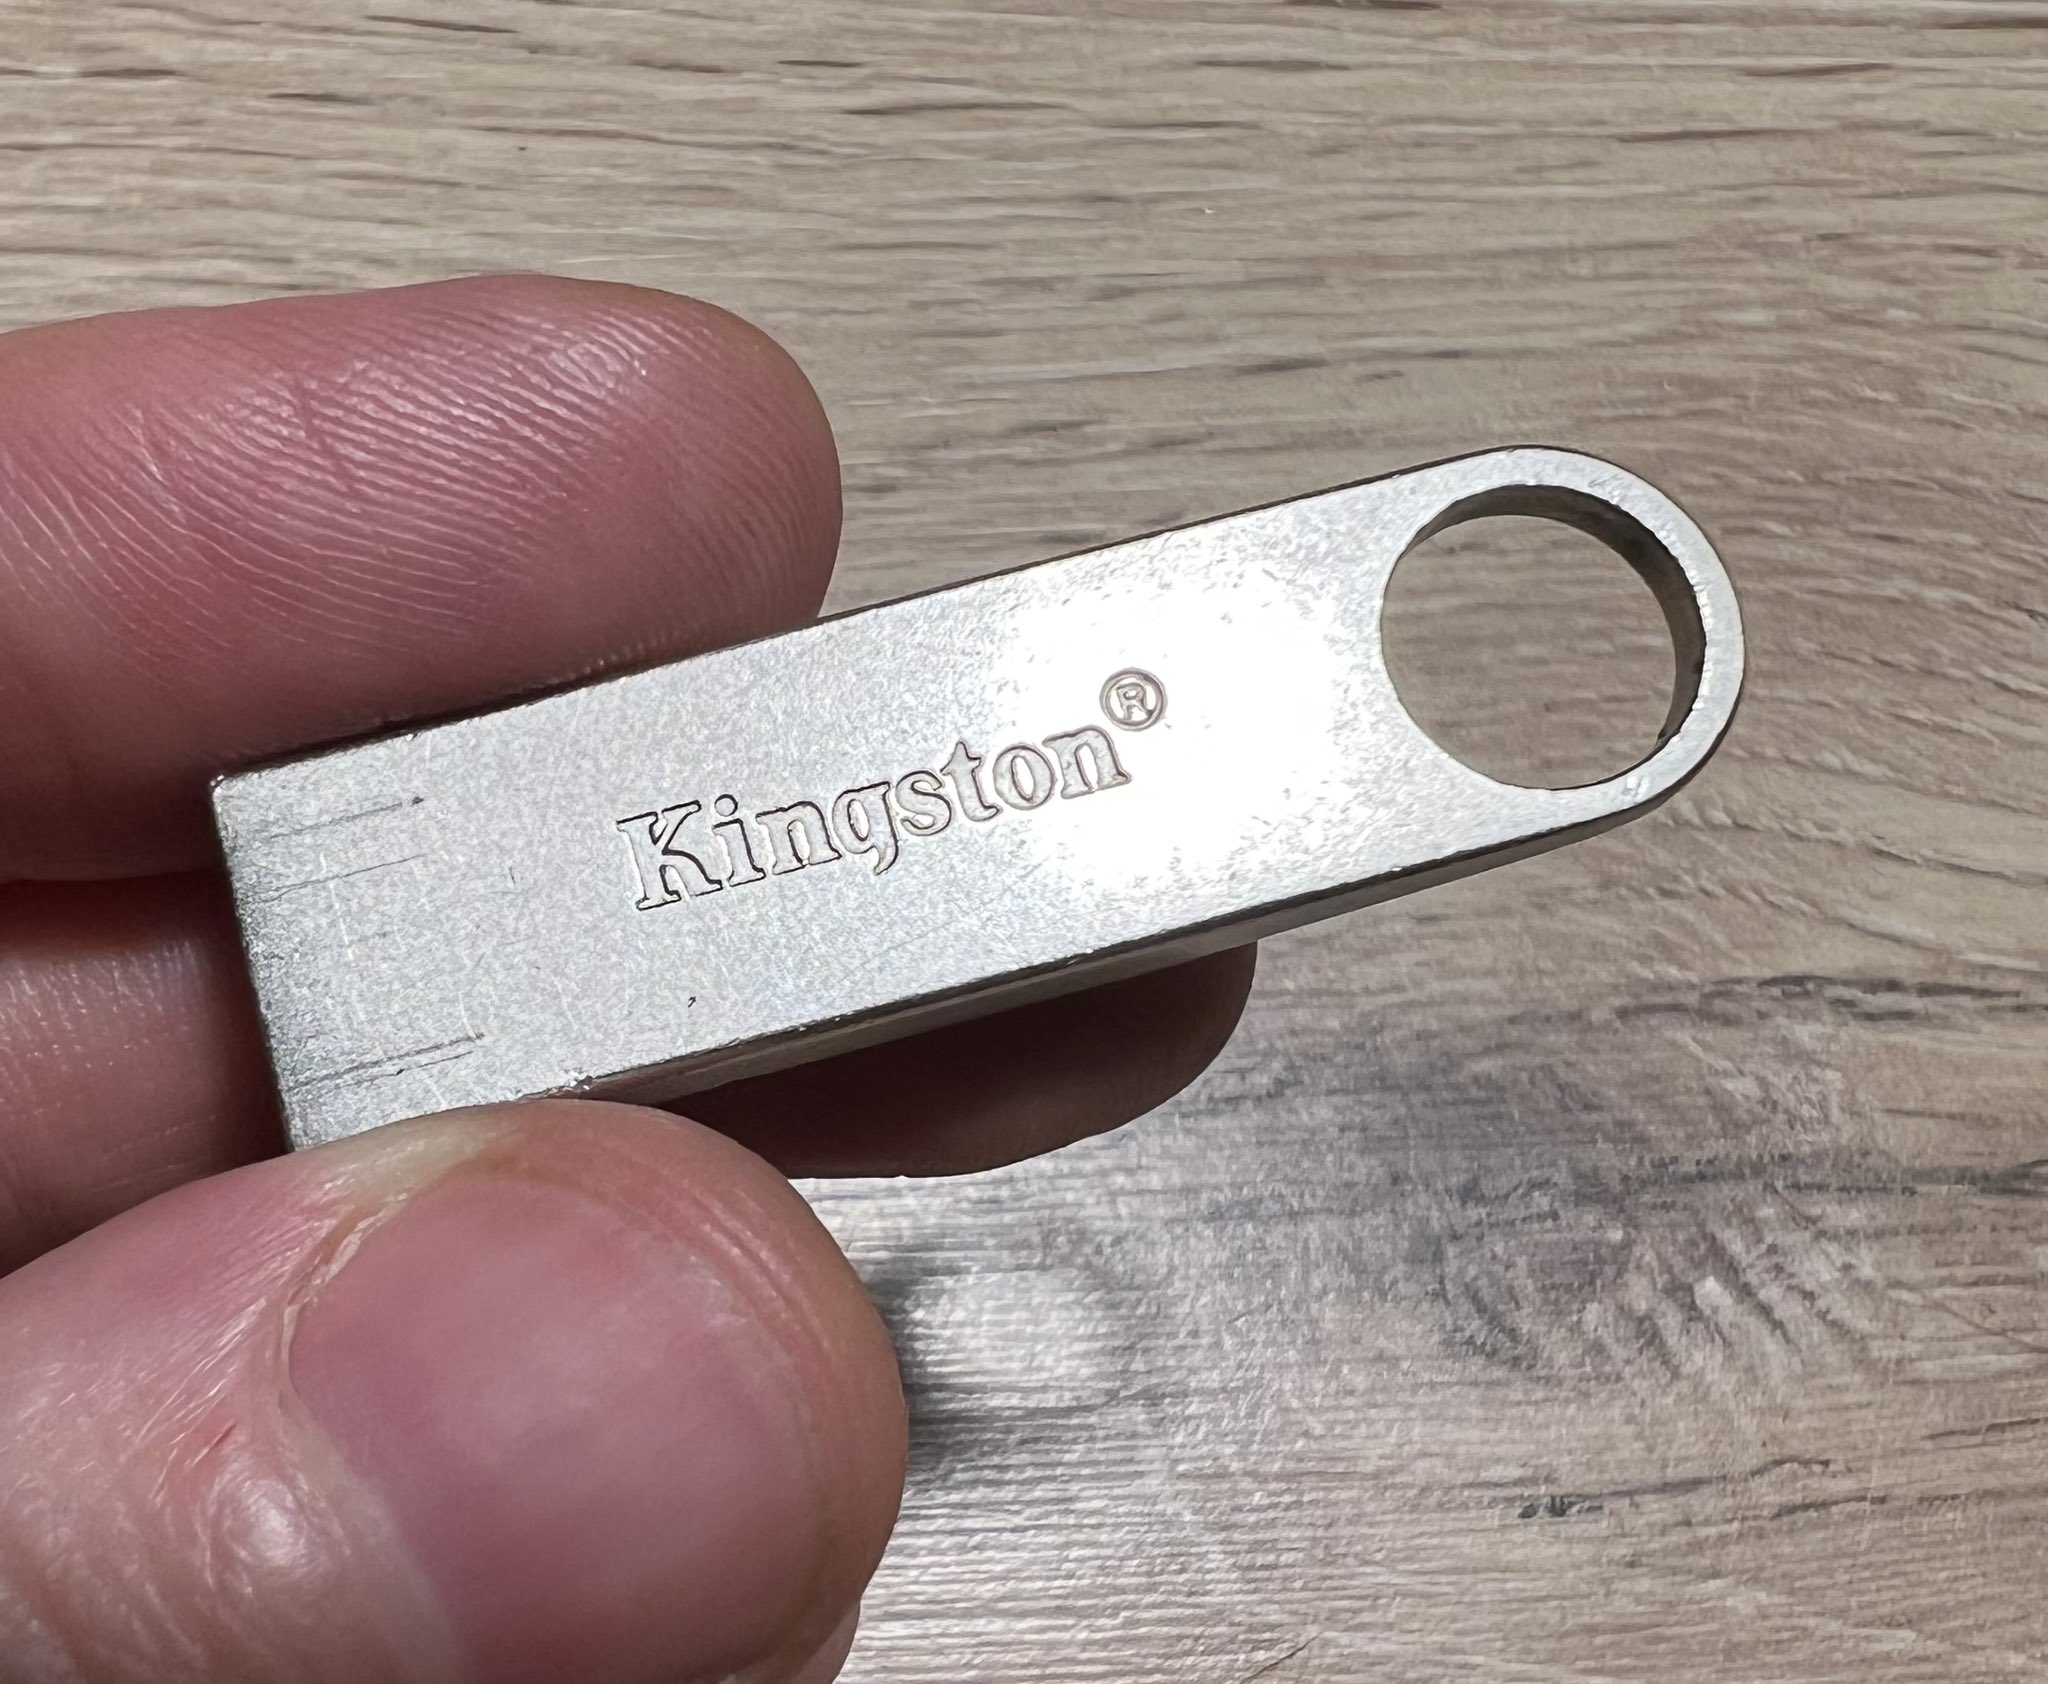 Kingston USB Key